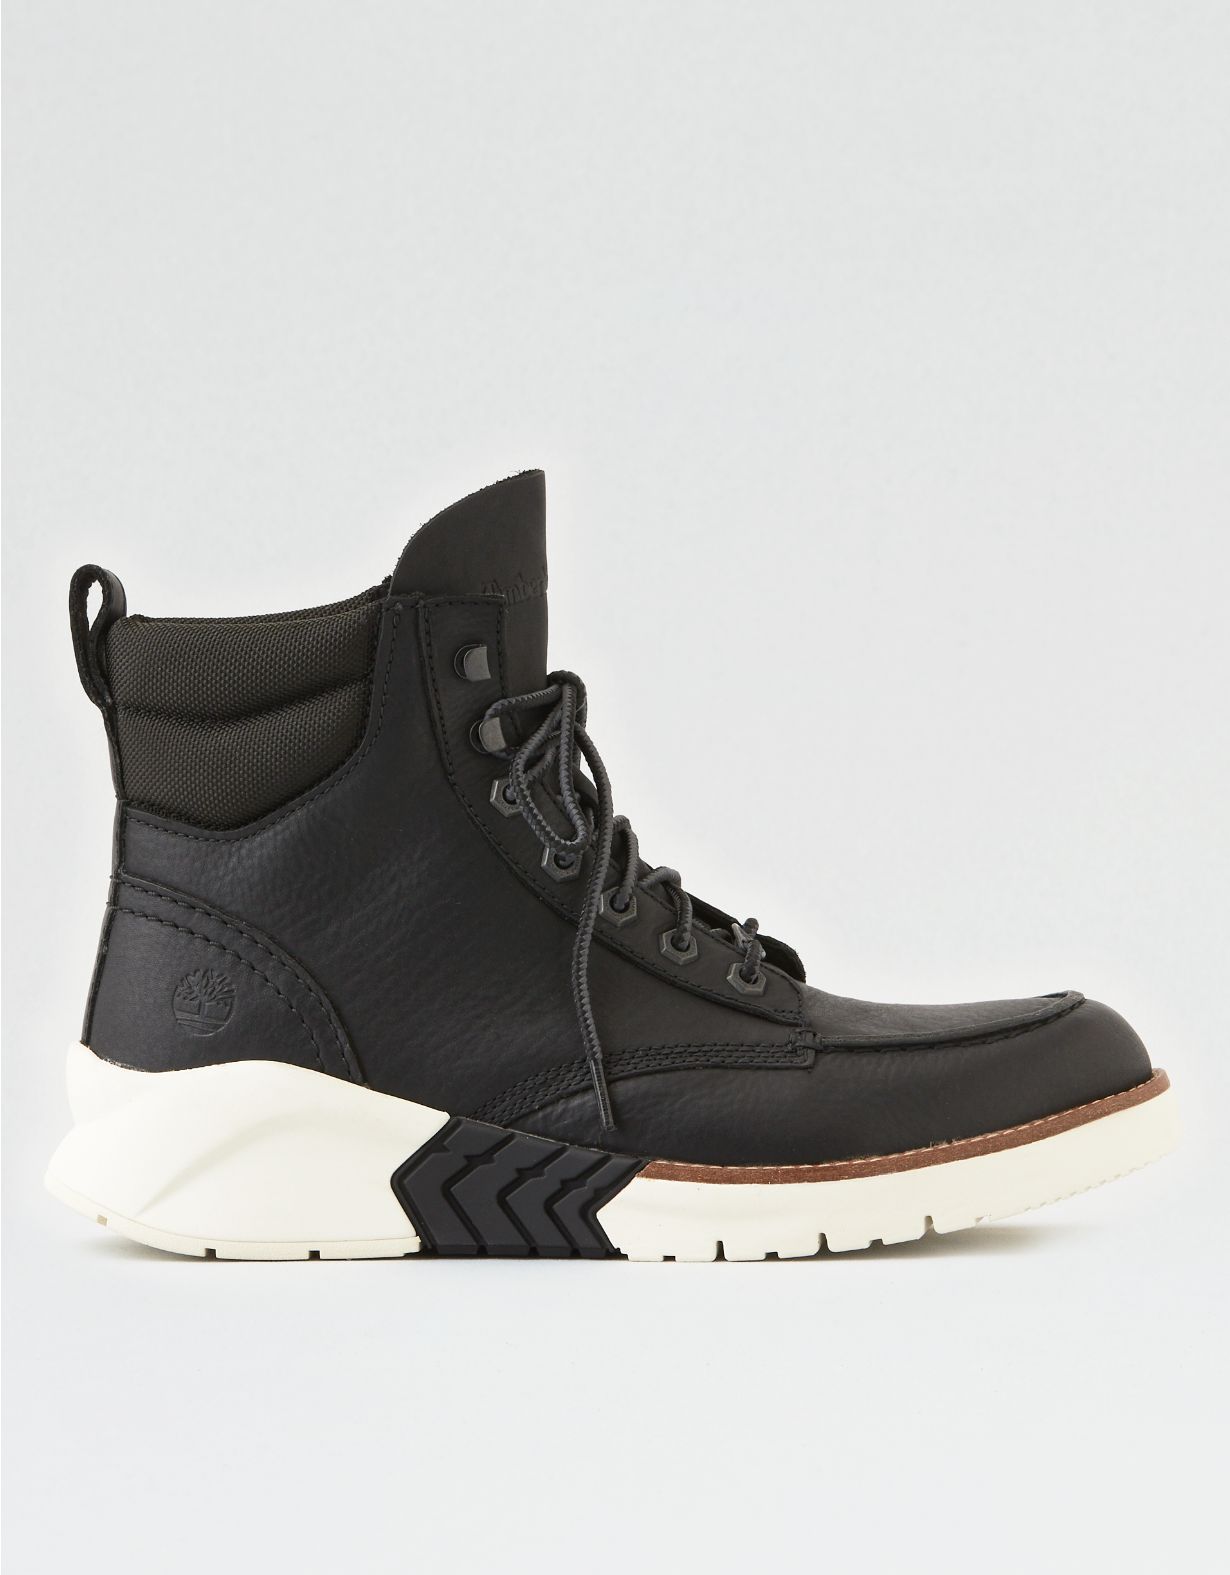 Timberland M.T.C.R. Moc Toe Sneaker Boot